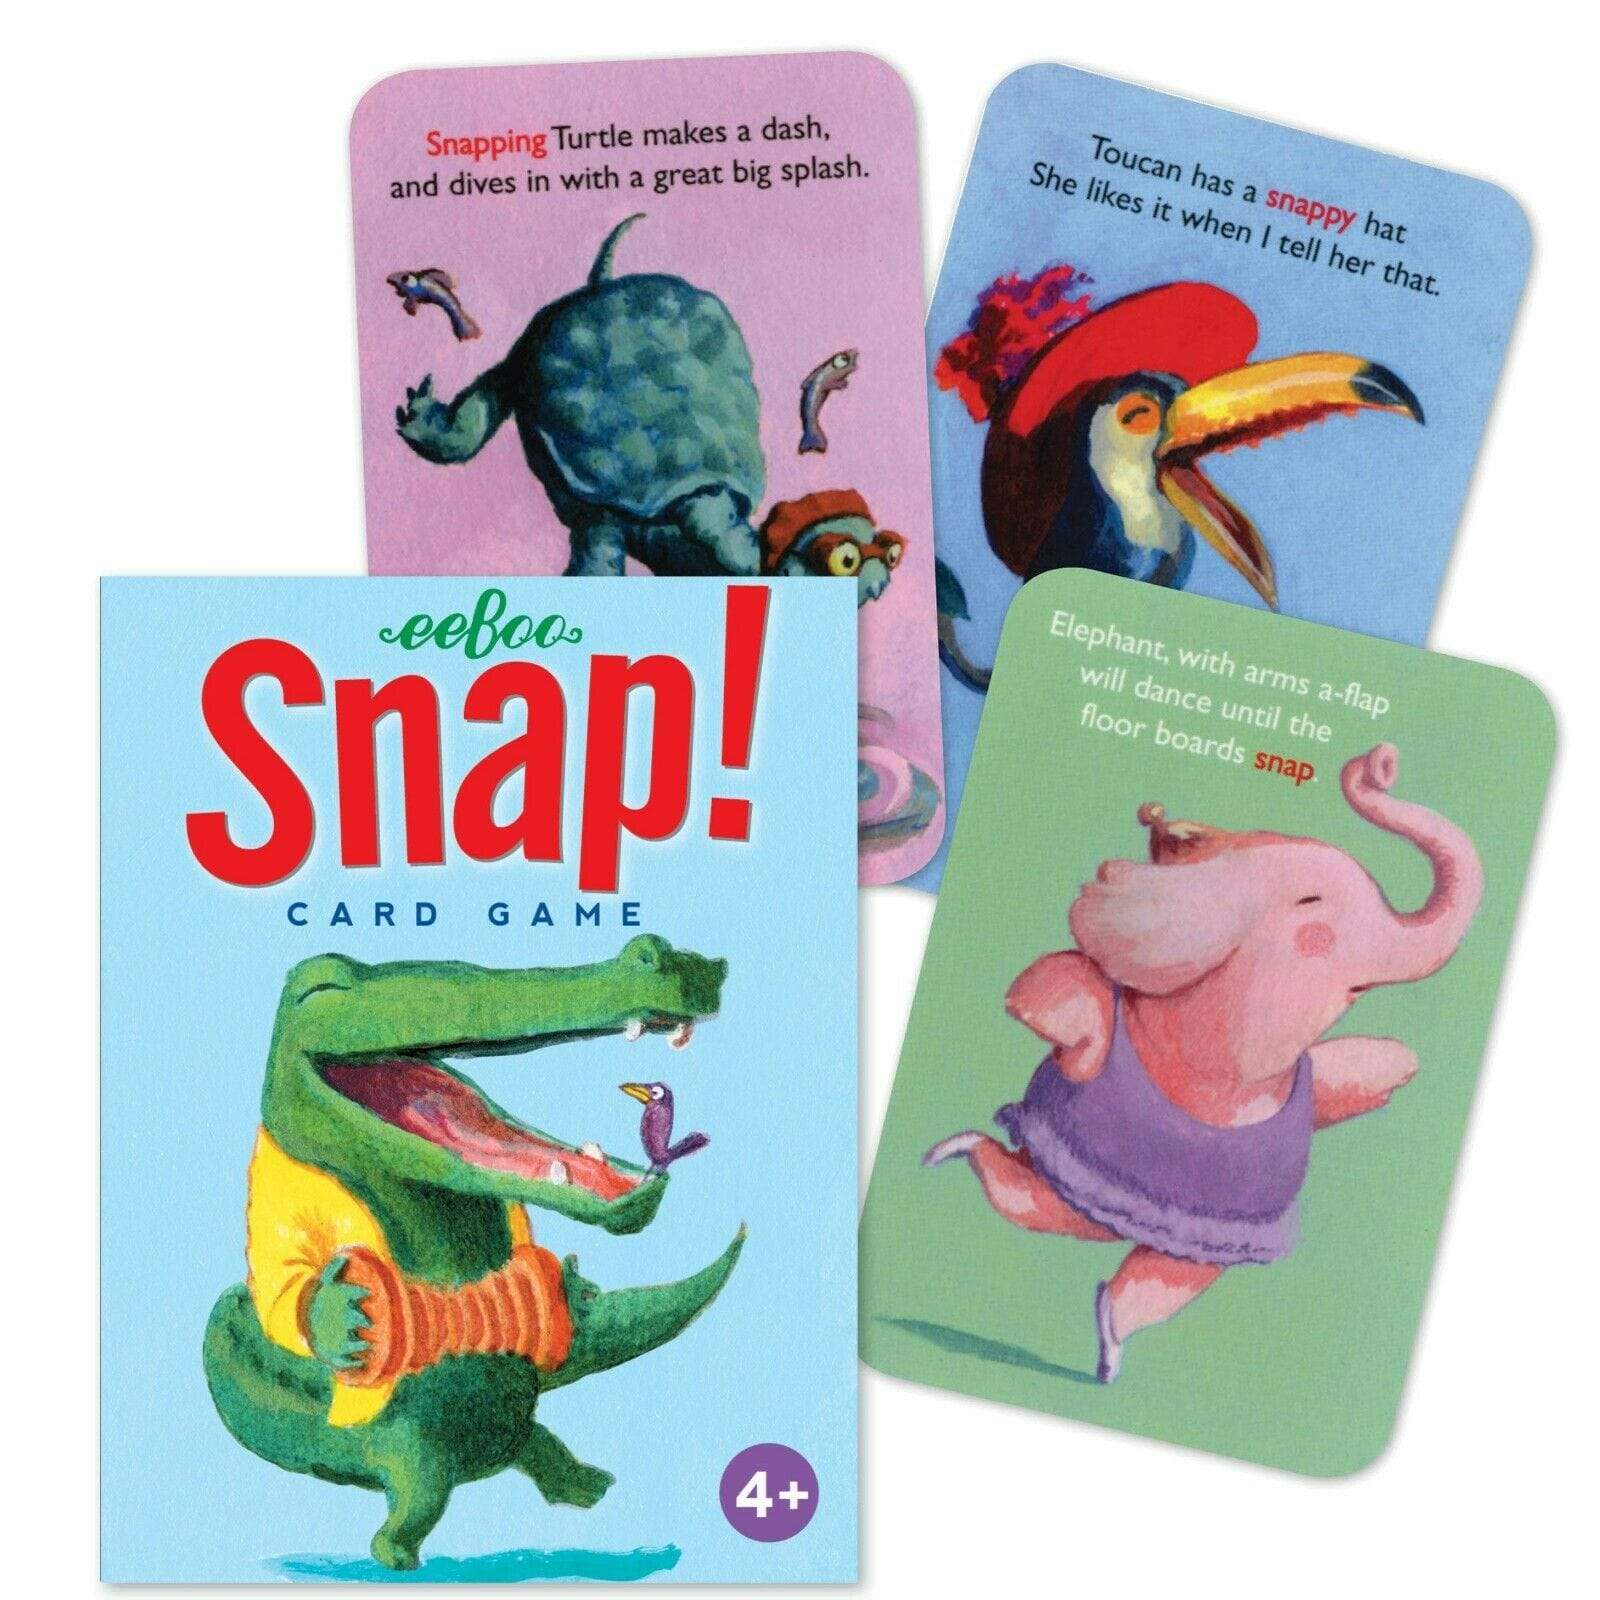 eeBoo Snap Card Game - Wigwam Toys Brighton (5137298981002)